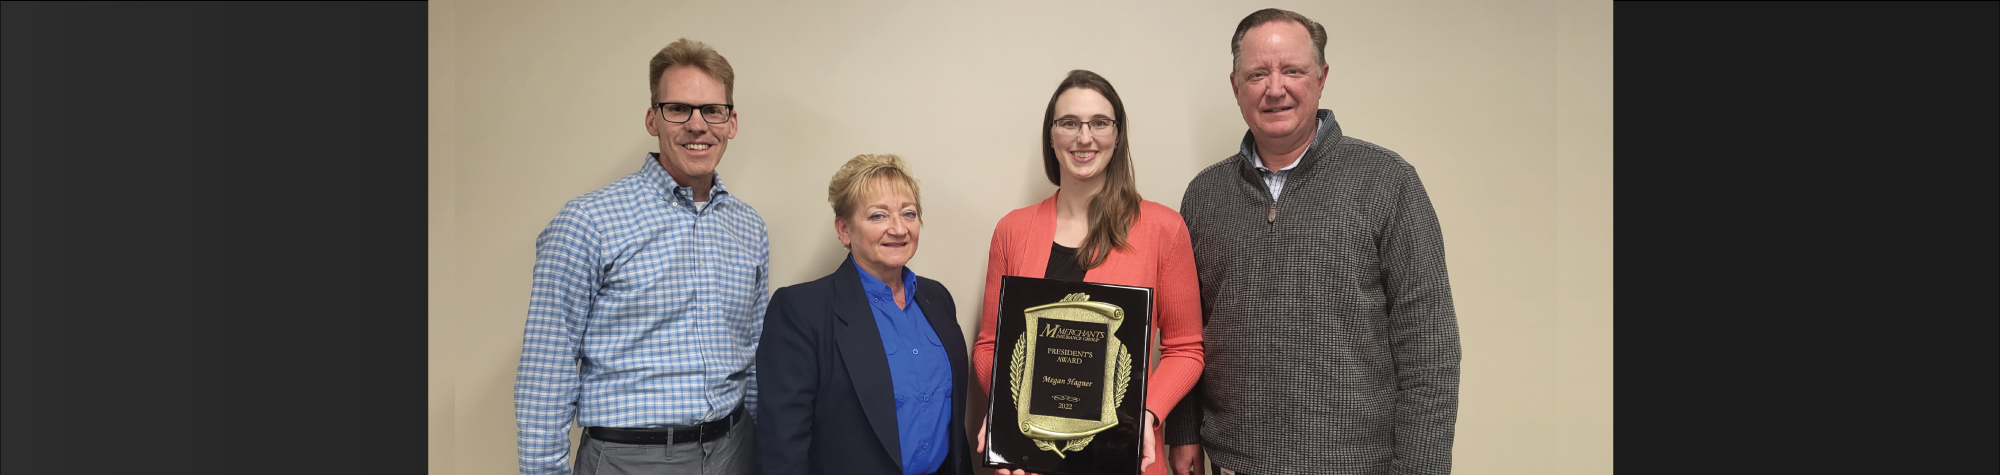 Megan Hagner, Corporate Actuary, Receives Merchants Insurance Group’s 2022 President’s Award